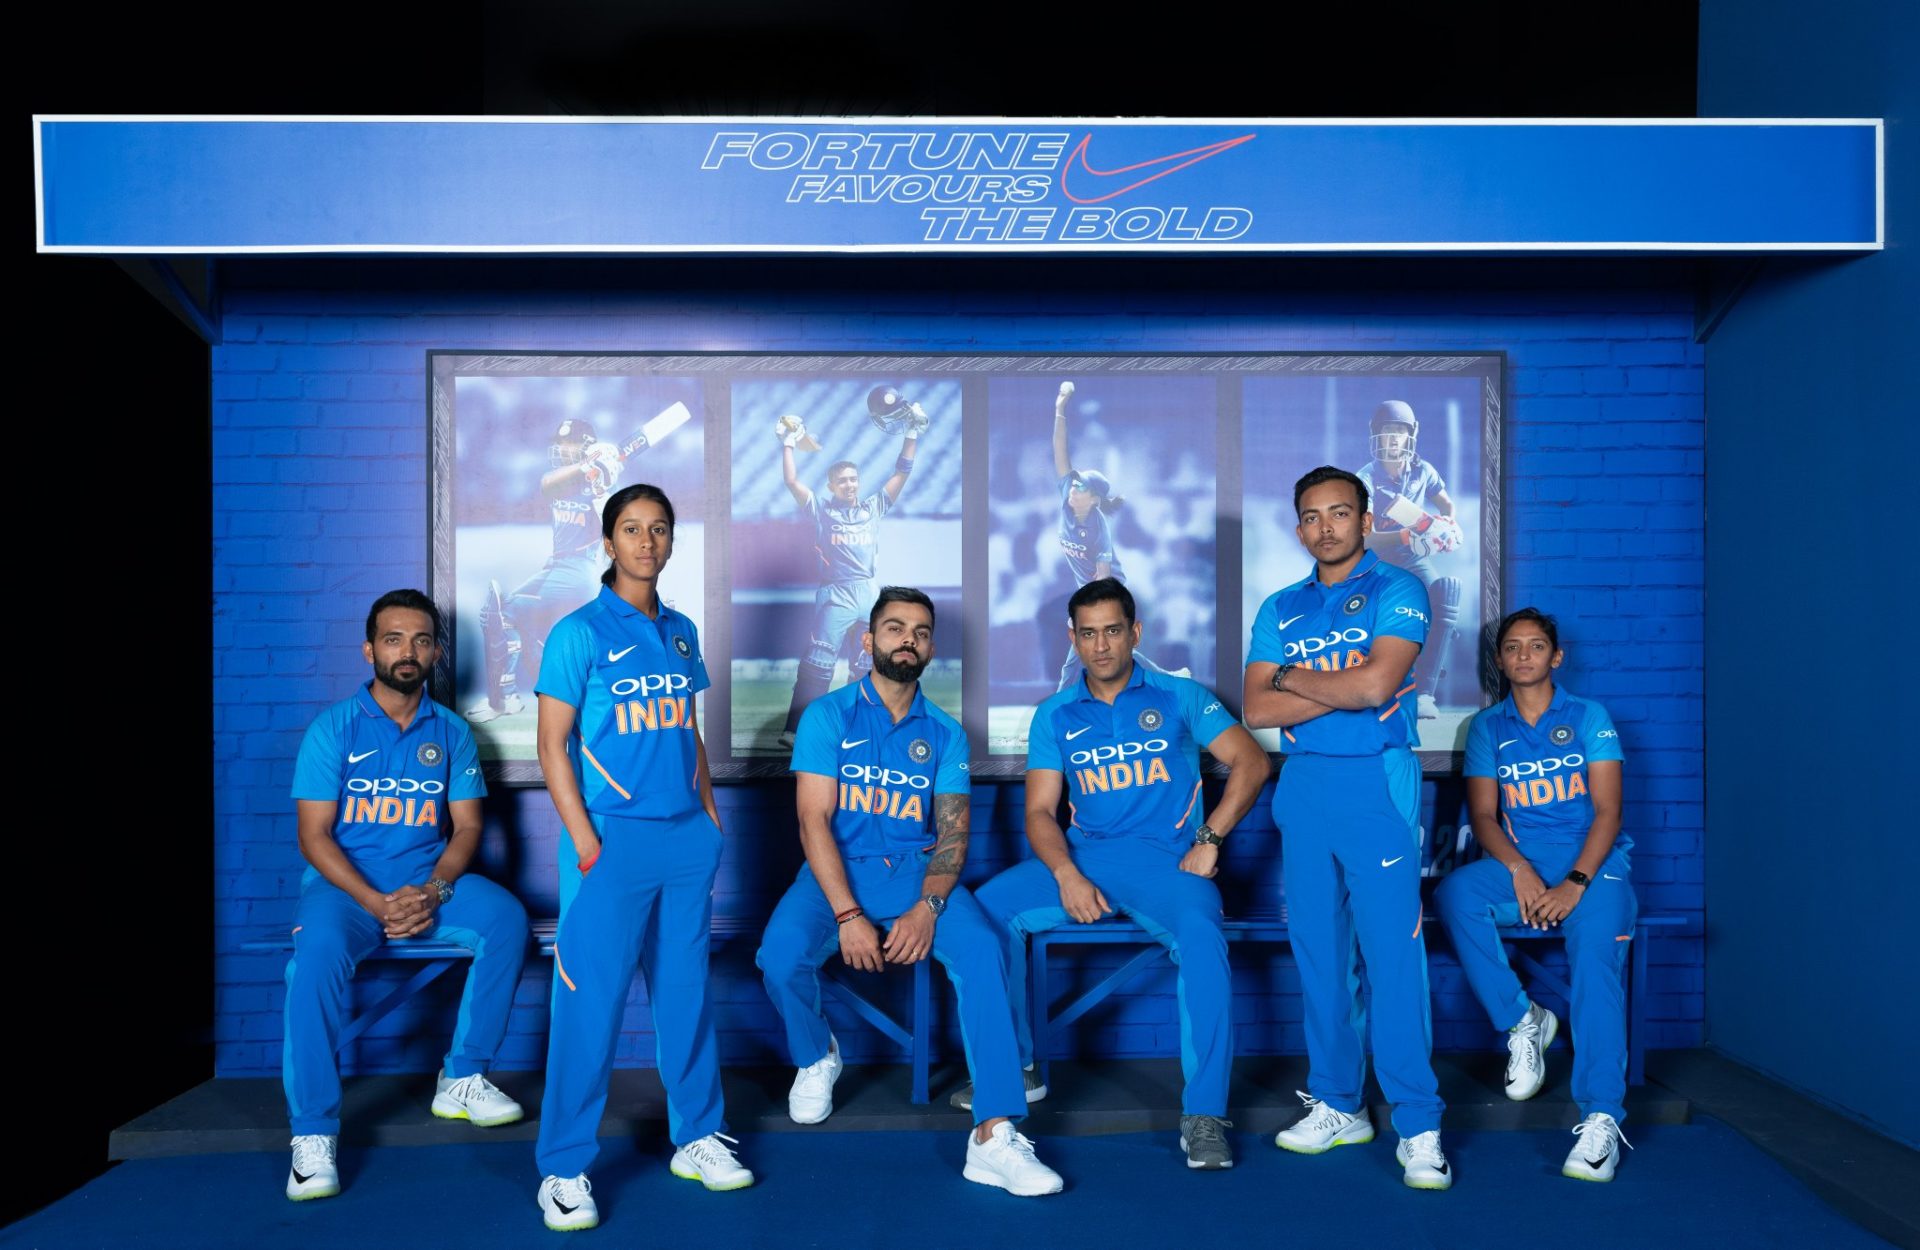 nike cricket world cup jerseys 2019